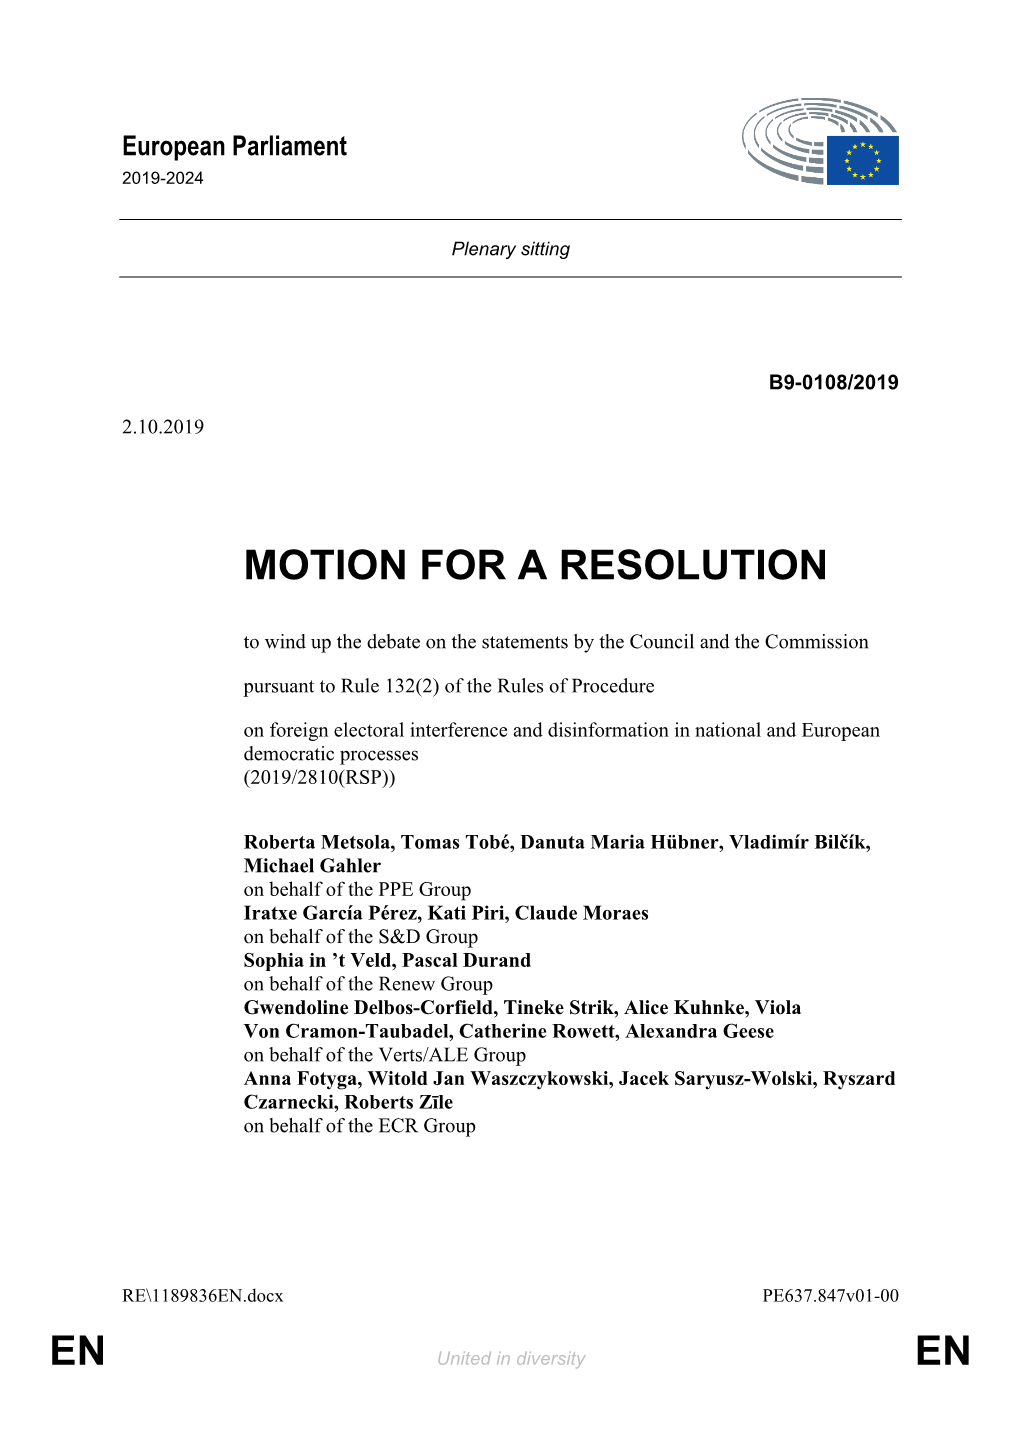 En En Motion for a Resolution